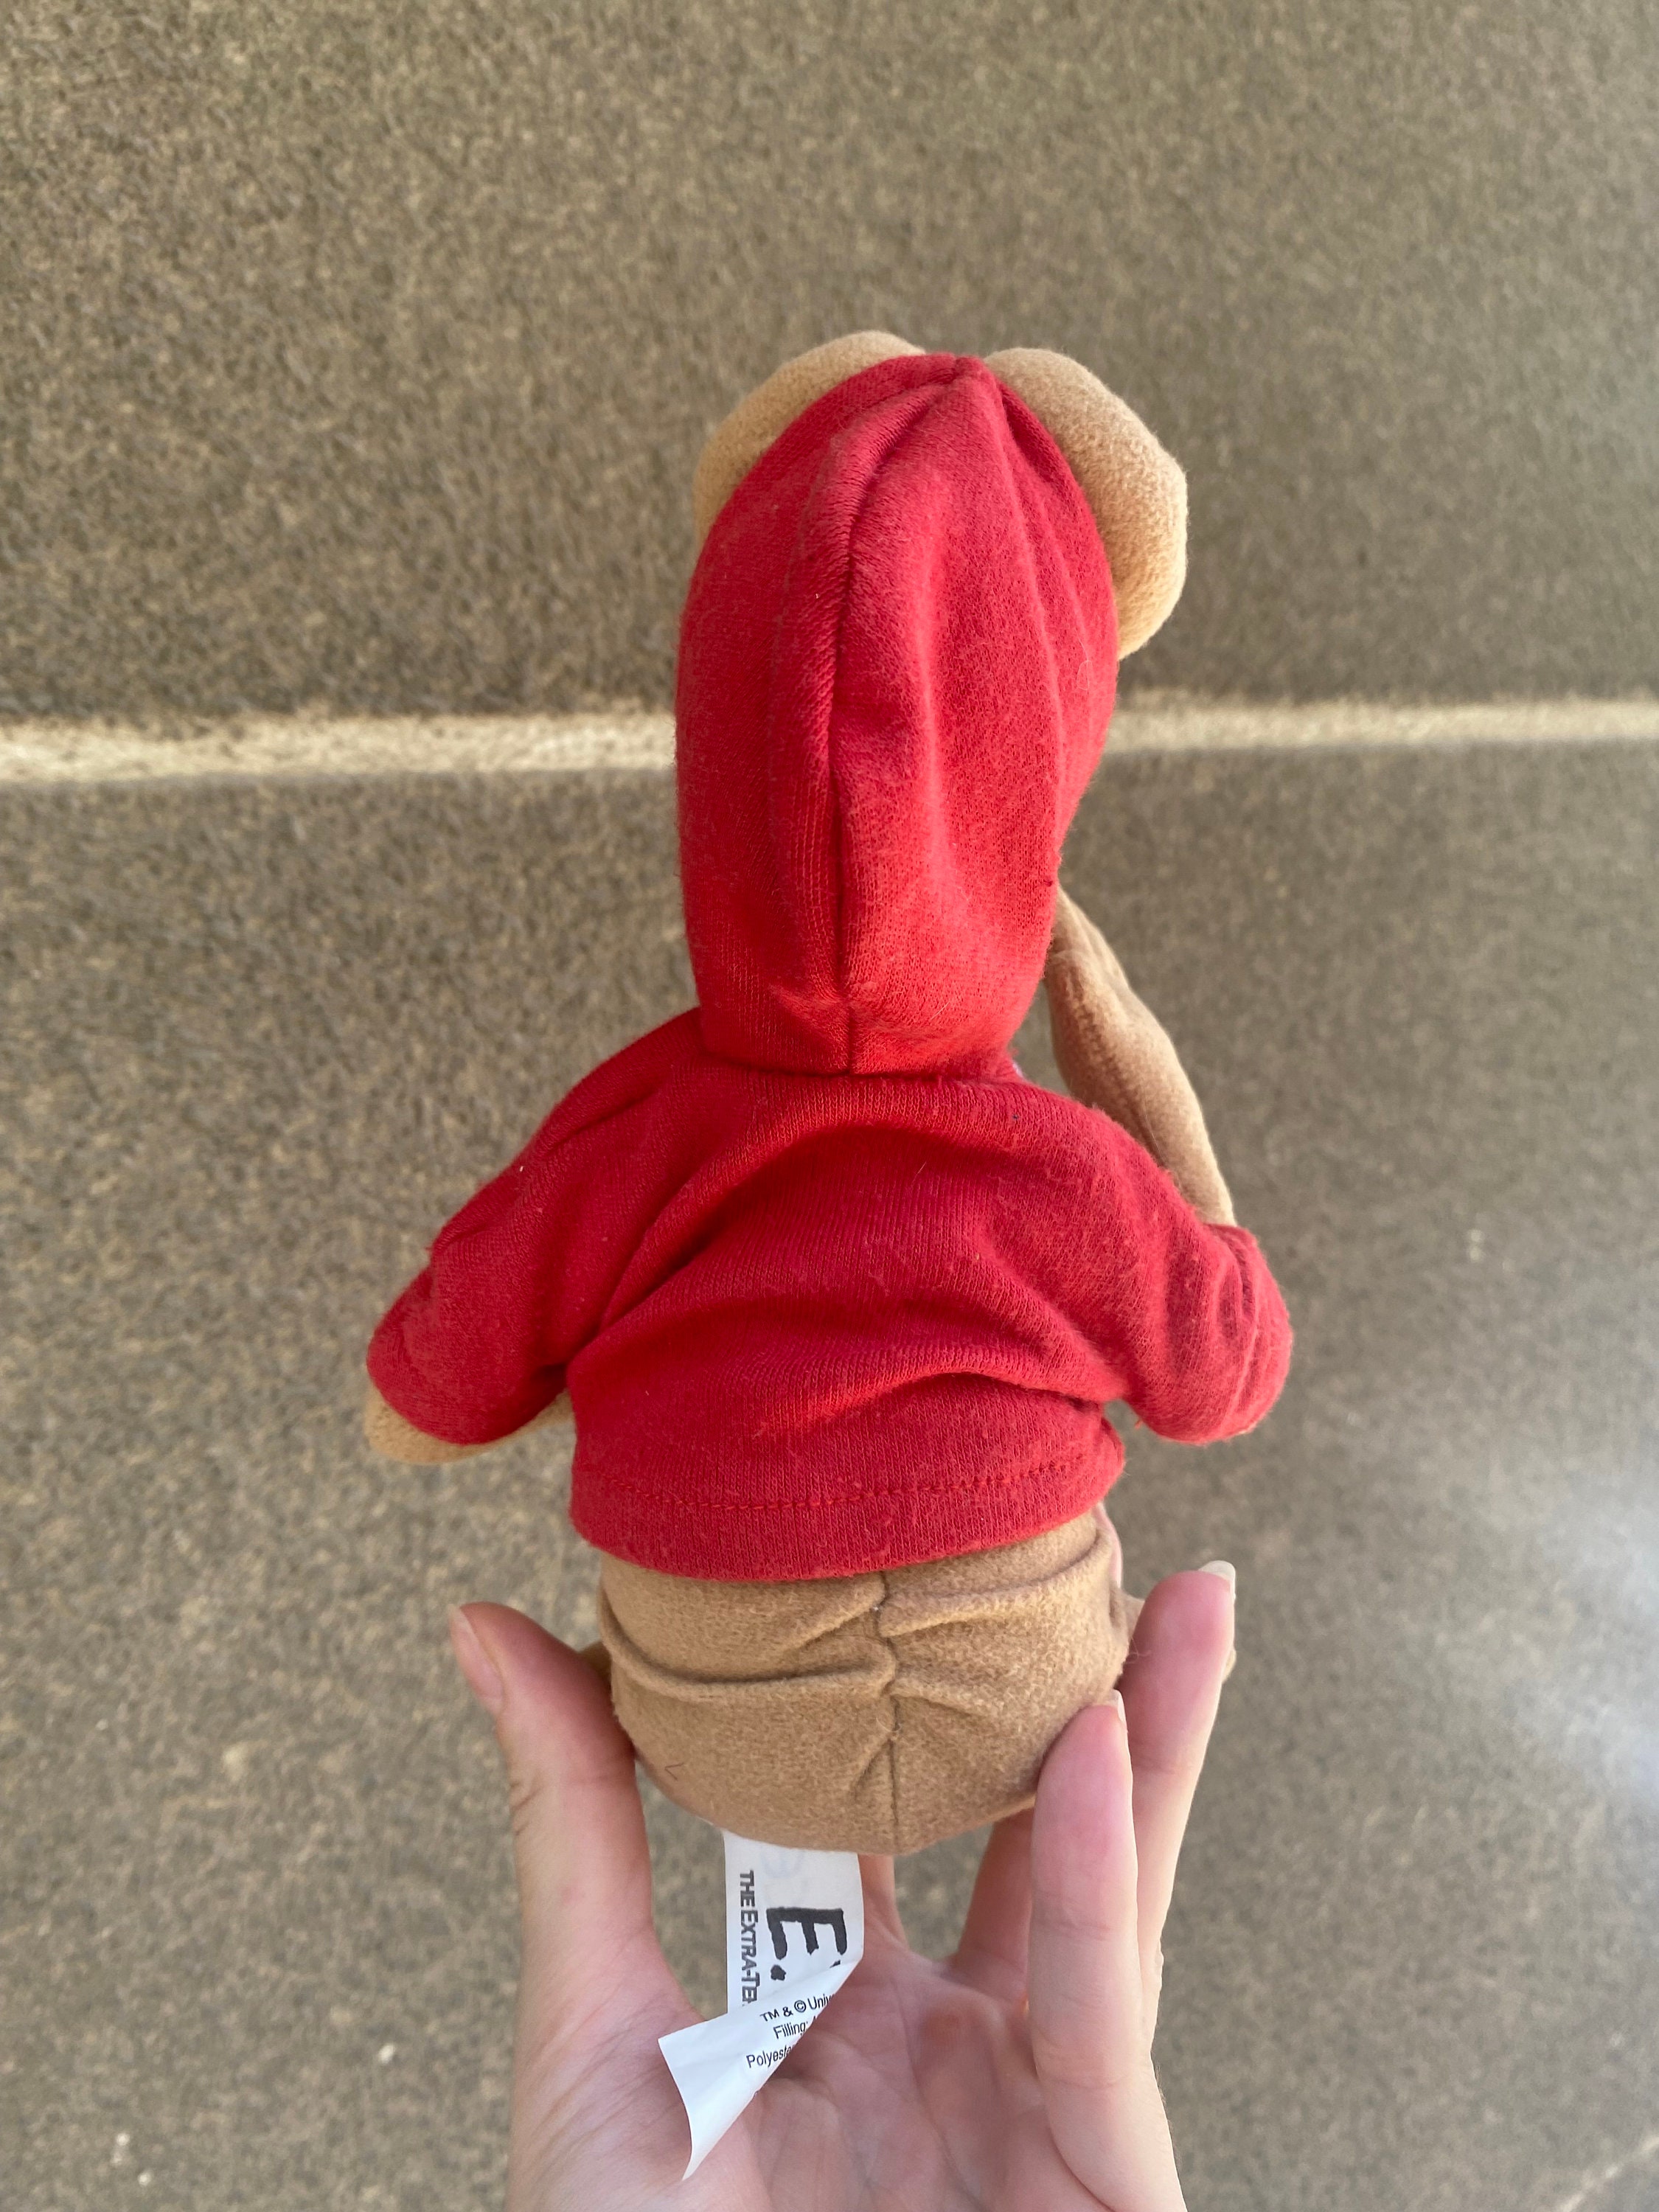 ET Extra Terrestrial Plush Toy Stuffed Alien Toy in Red Hoodie, ET